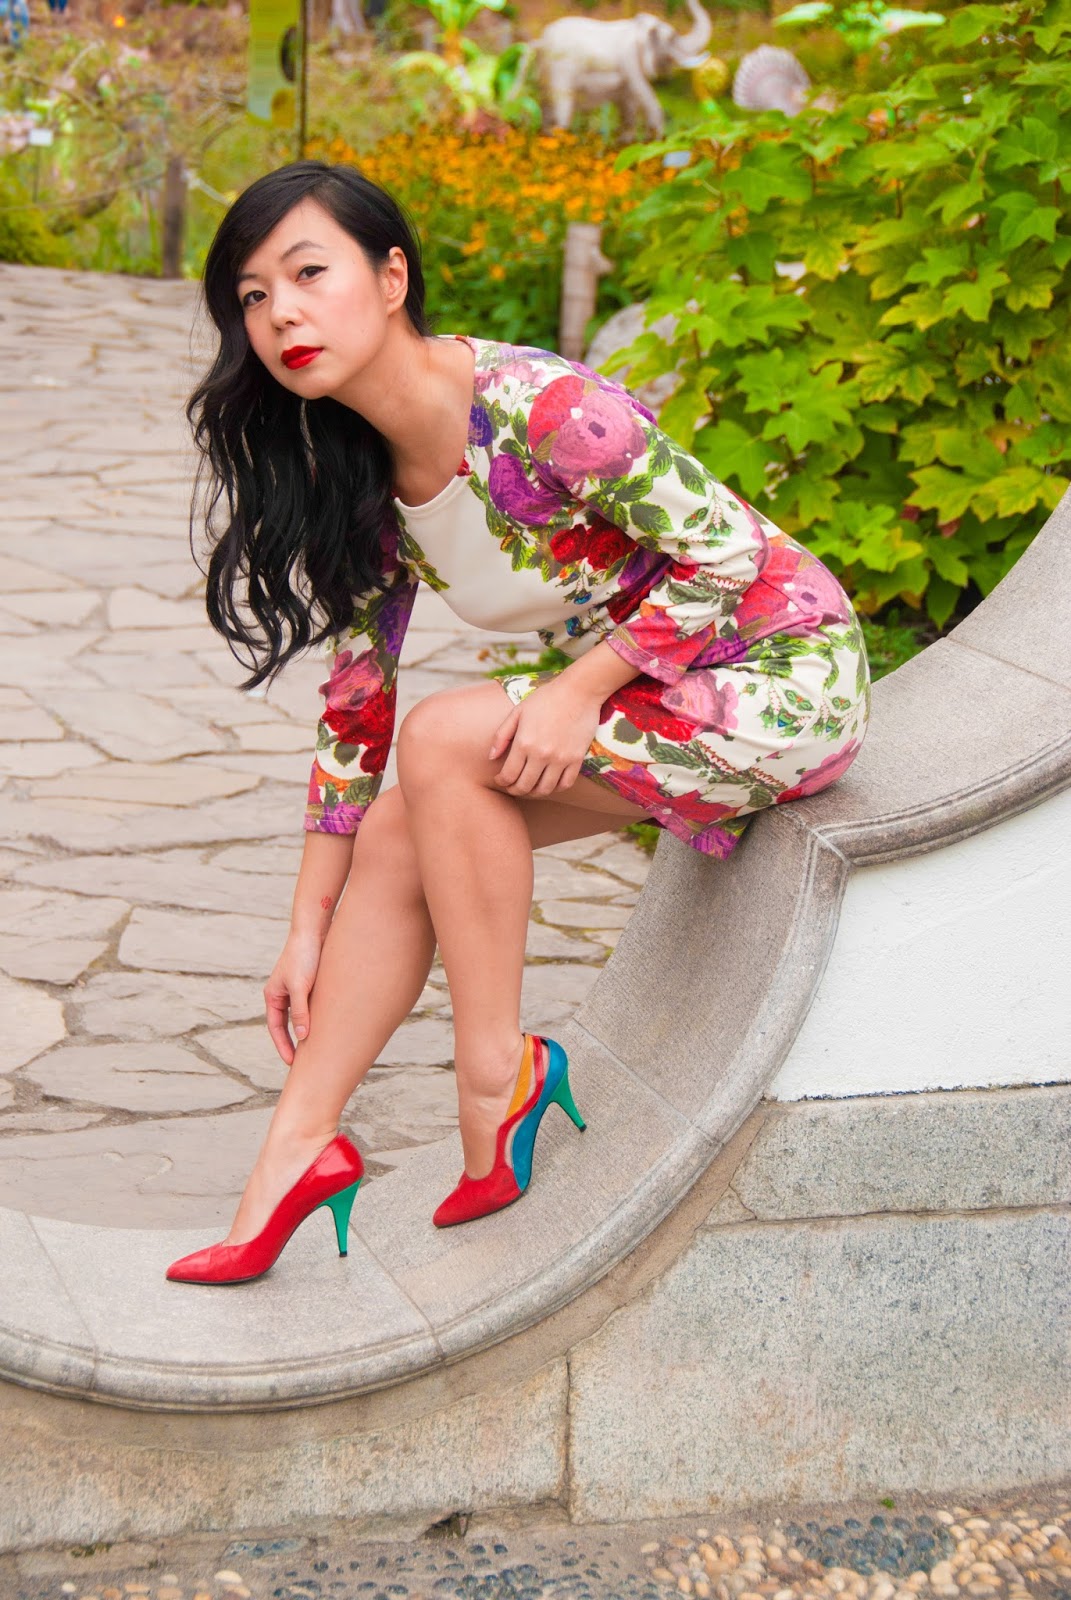 floral garden dress cutout backless colorblock heels pumps red lips